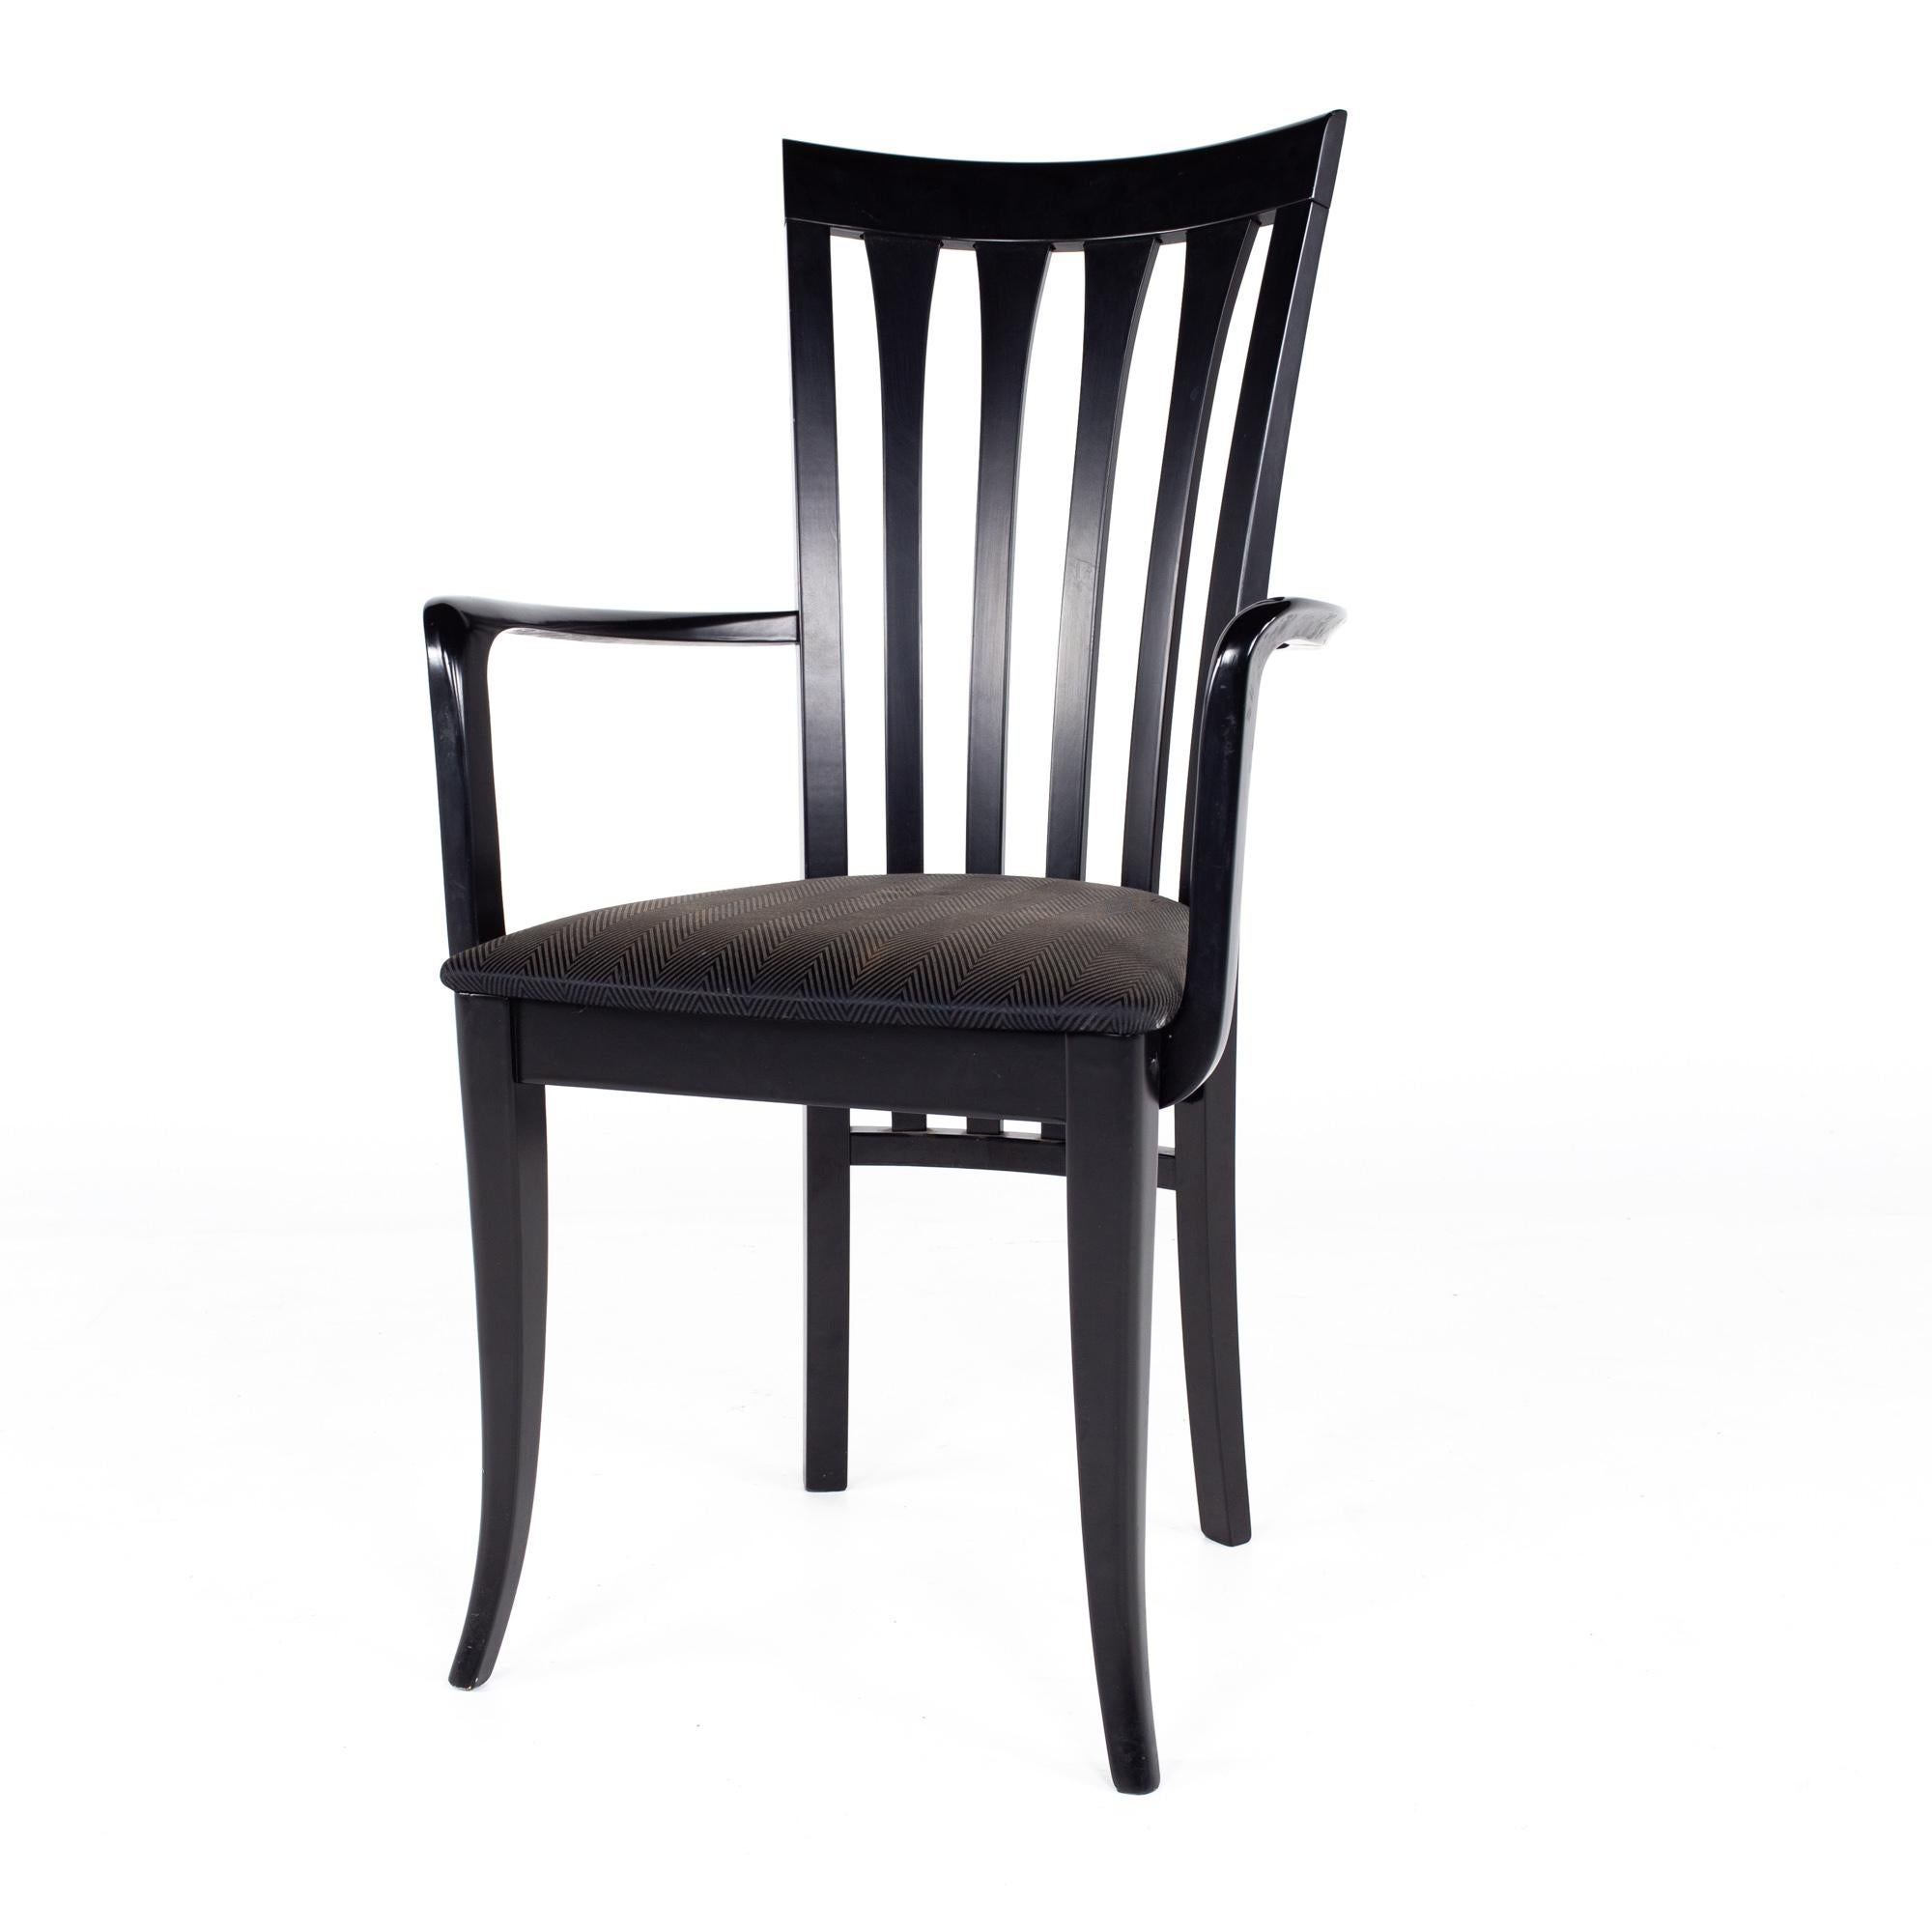 Blackened Sibau Italian Black High Back Dining Chairs, Set of 6 For Sale